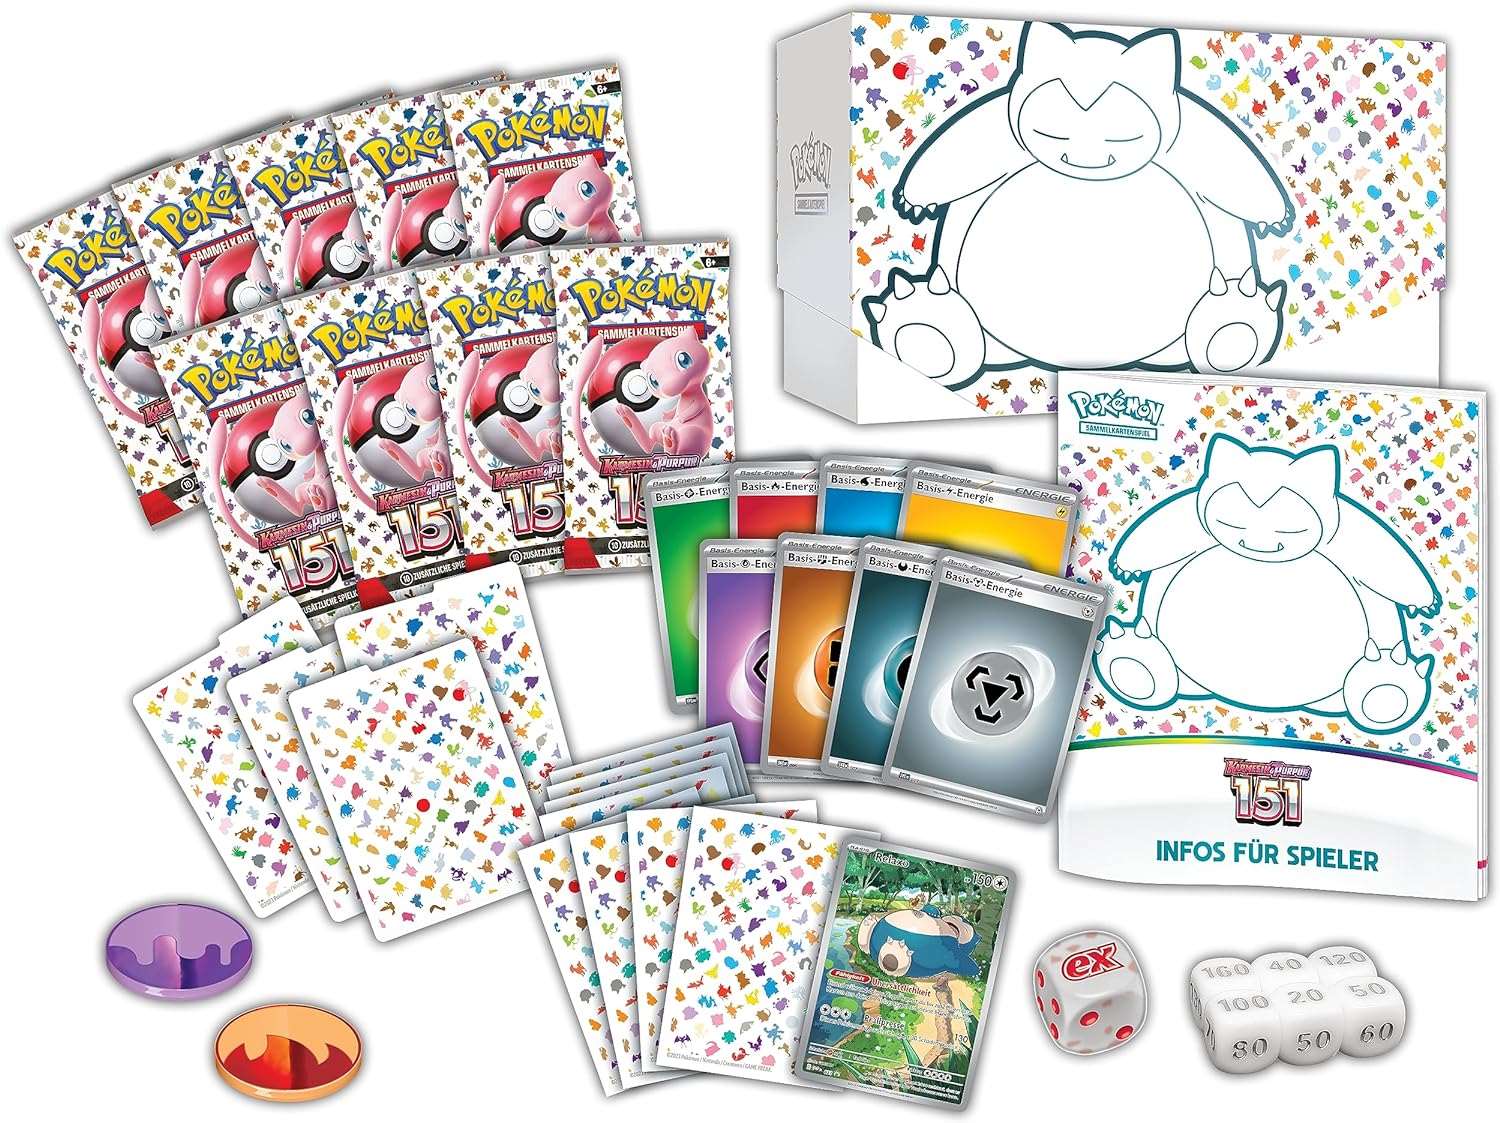 Pokémon - Karmesin & Purpur: 151 Top Trainer Box - DE - CardCosmos